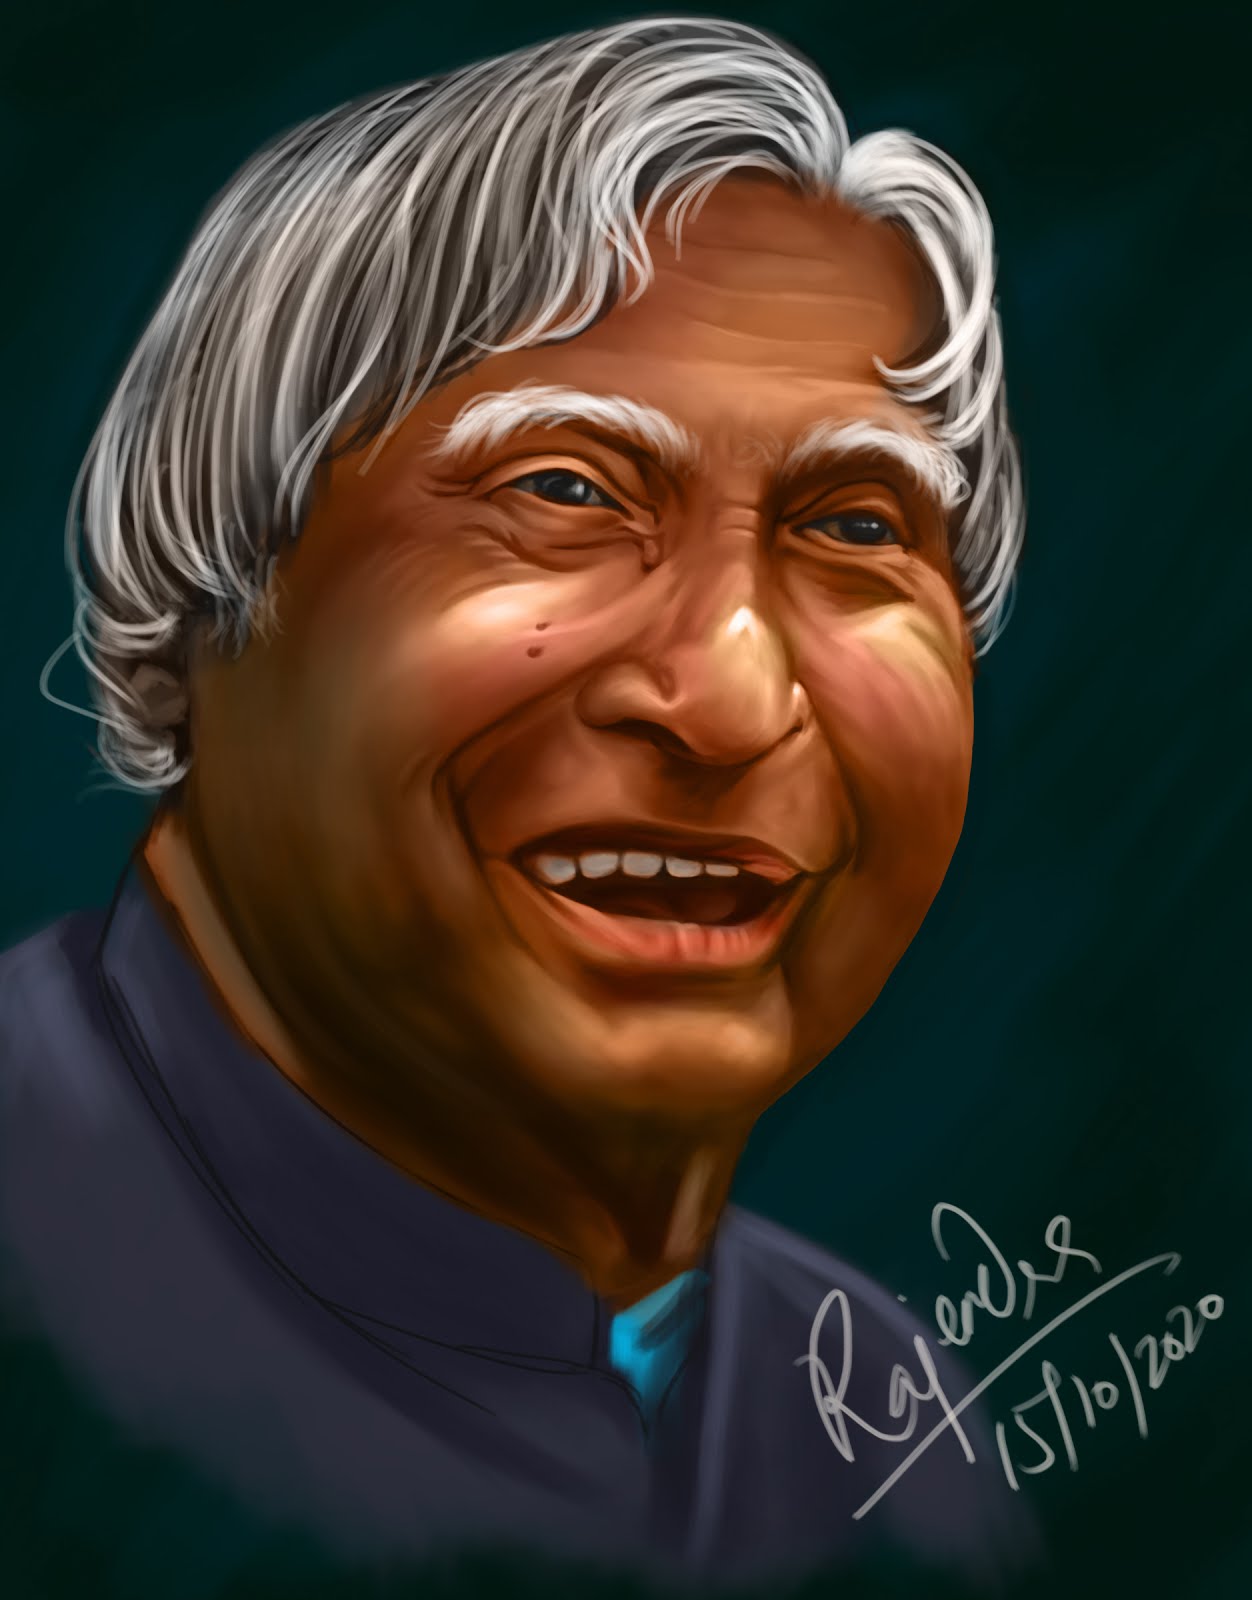 Digital Portrait APJ Abdul Kalam